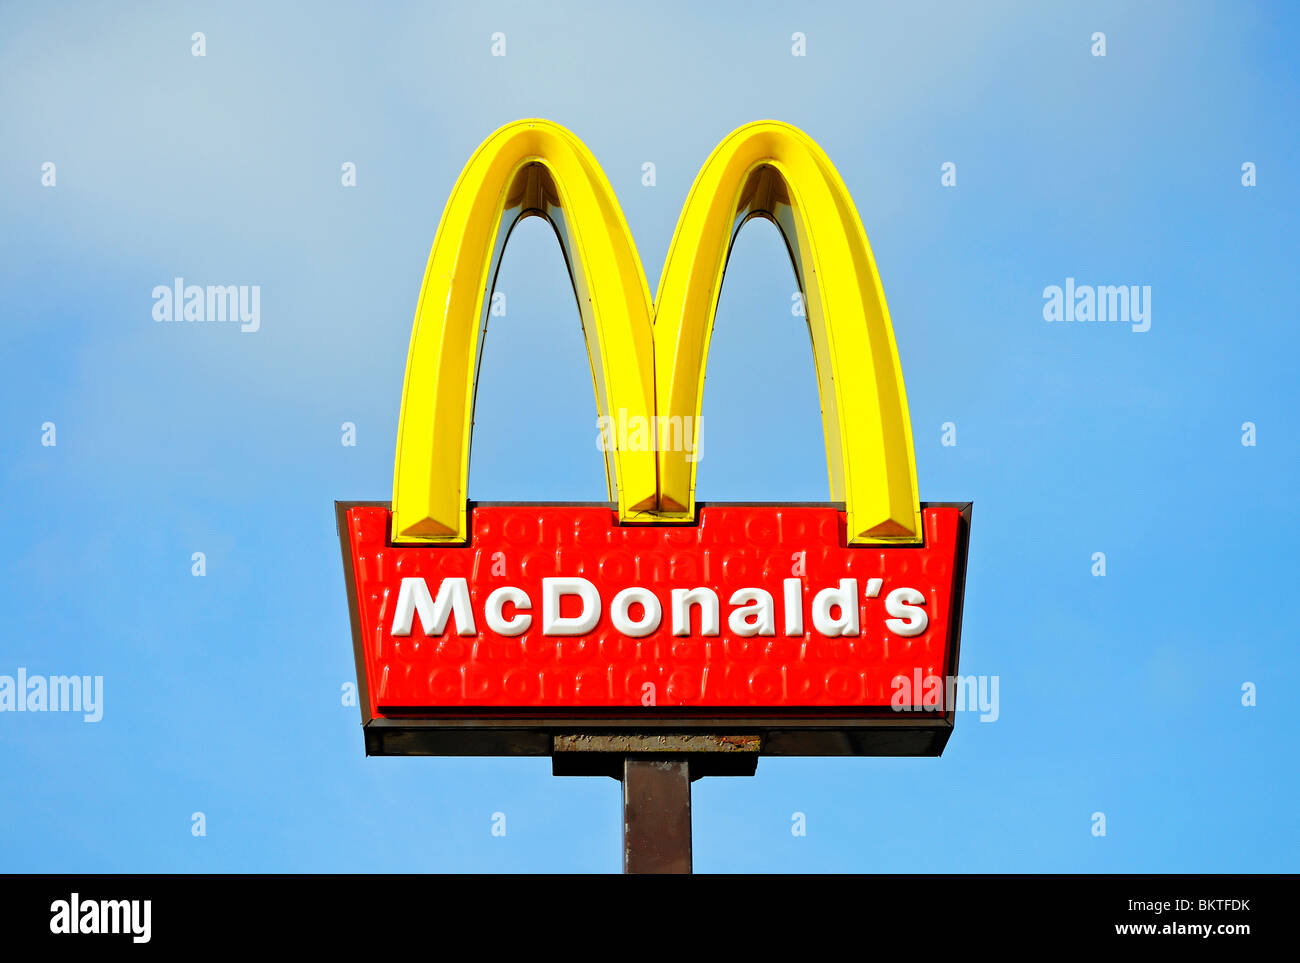 a mcdonalds restaurant sign Stock Photo